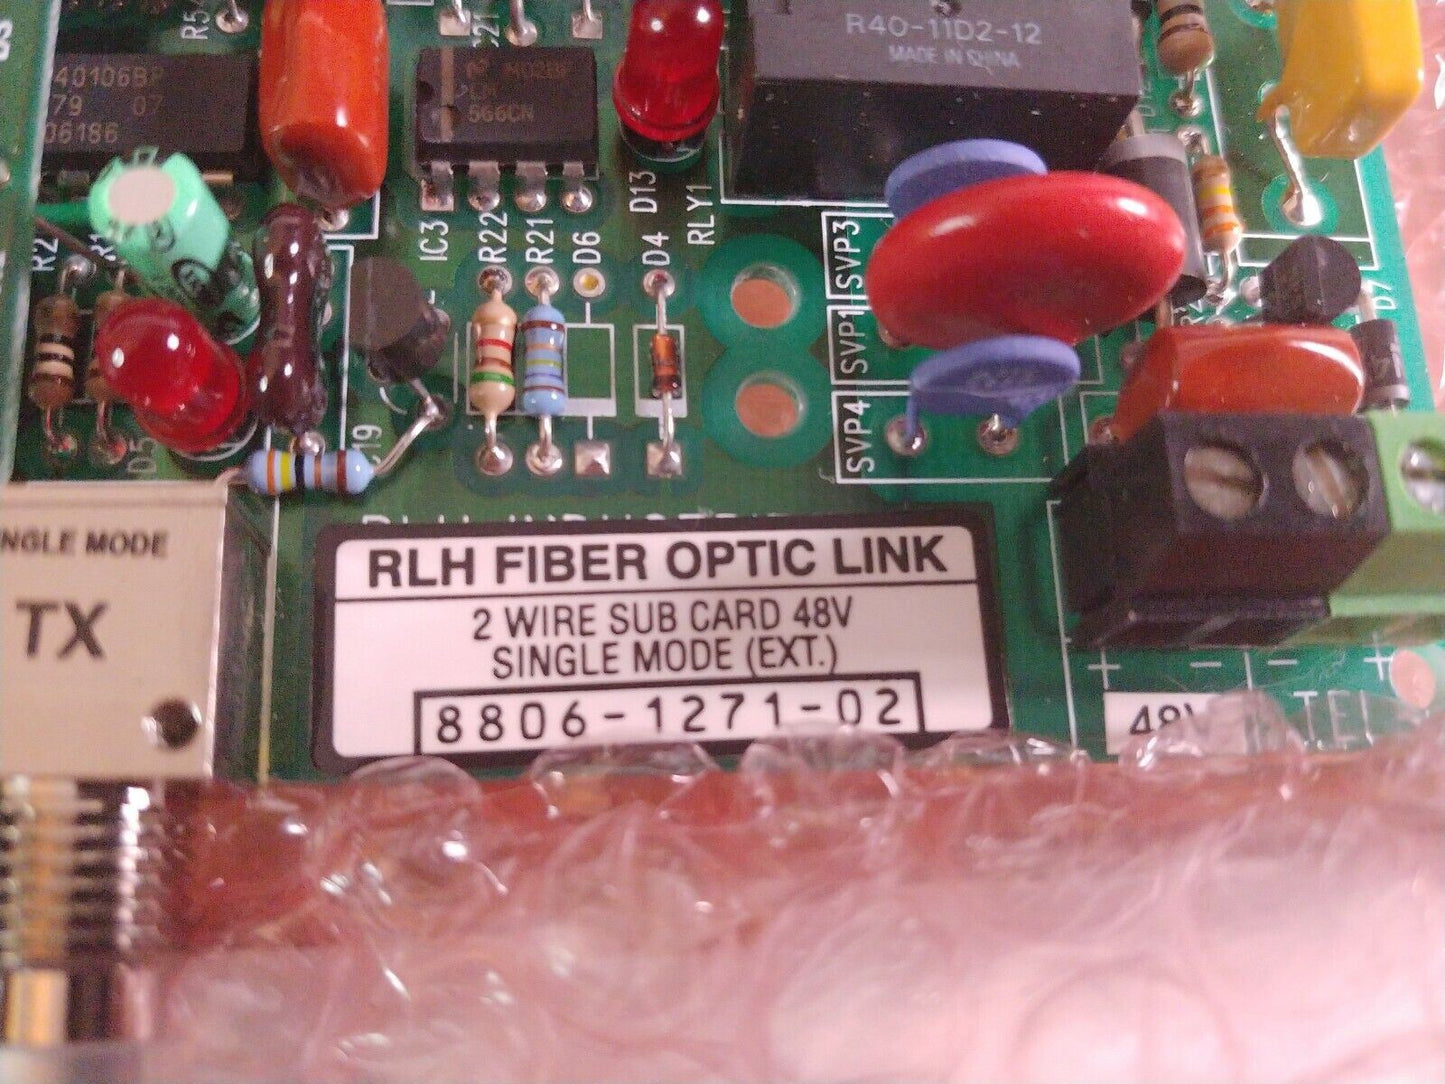 NEW RLH 8806-1271-02 Fiber Optic Link 2W SUB CARD Card 48V Single Mode EXTended